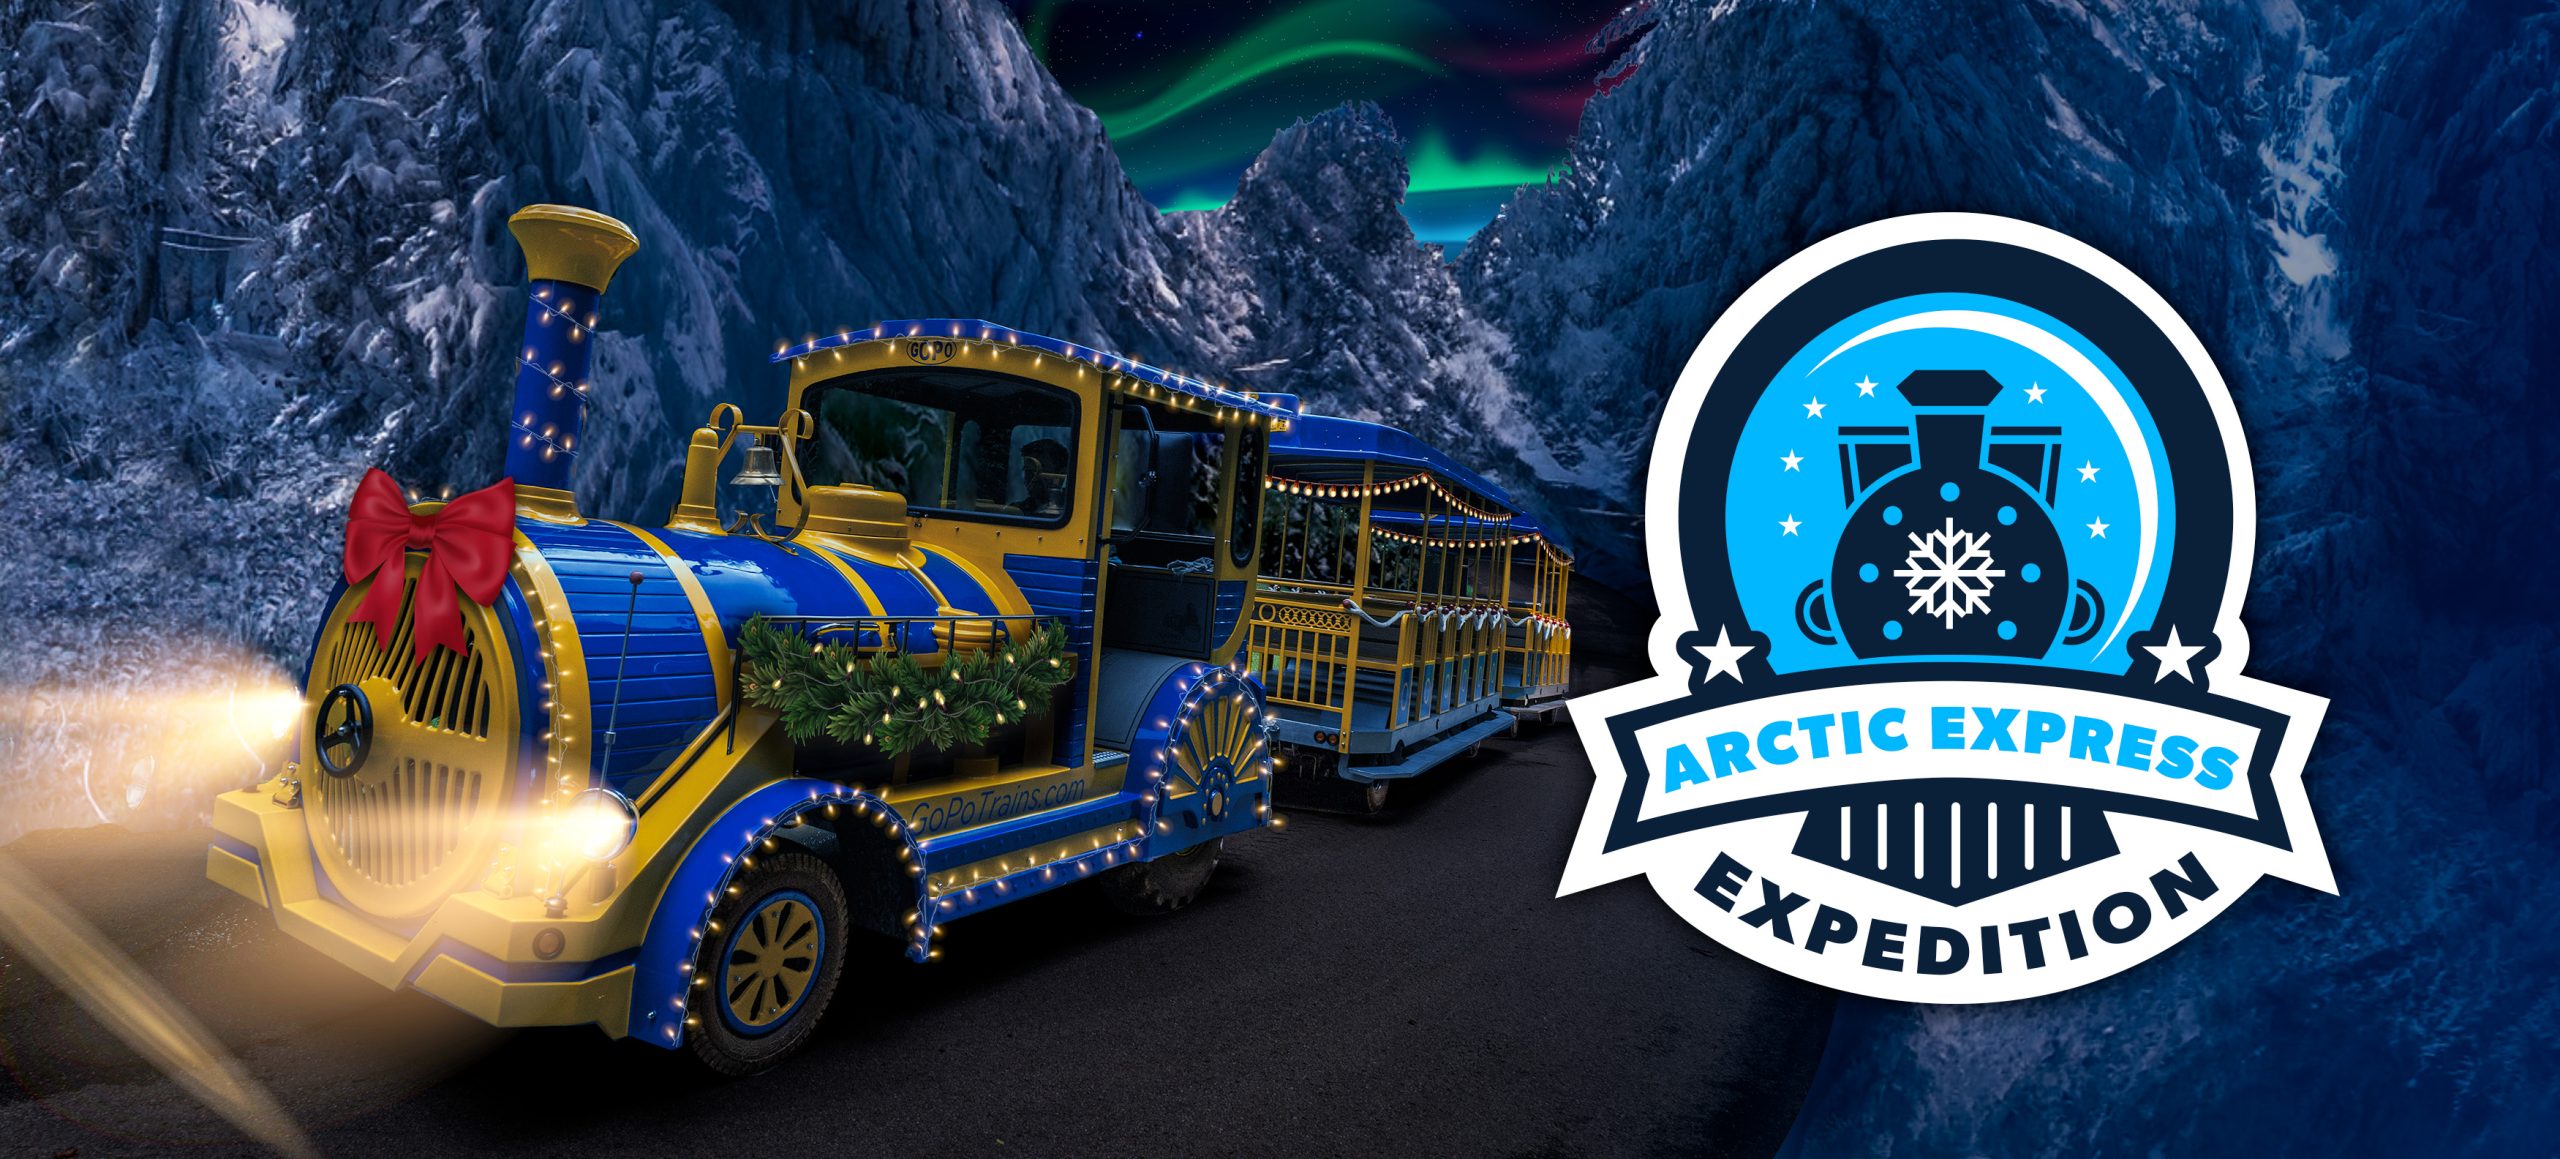 Arctic Express Expedition header photo